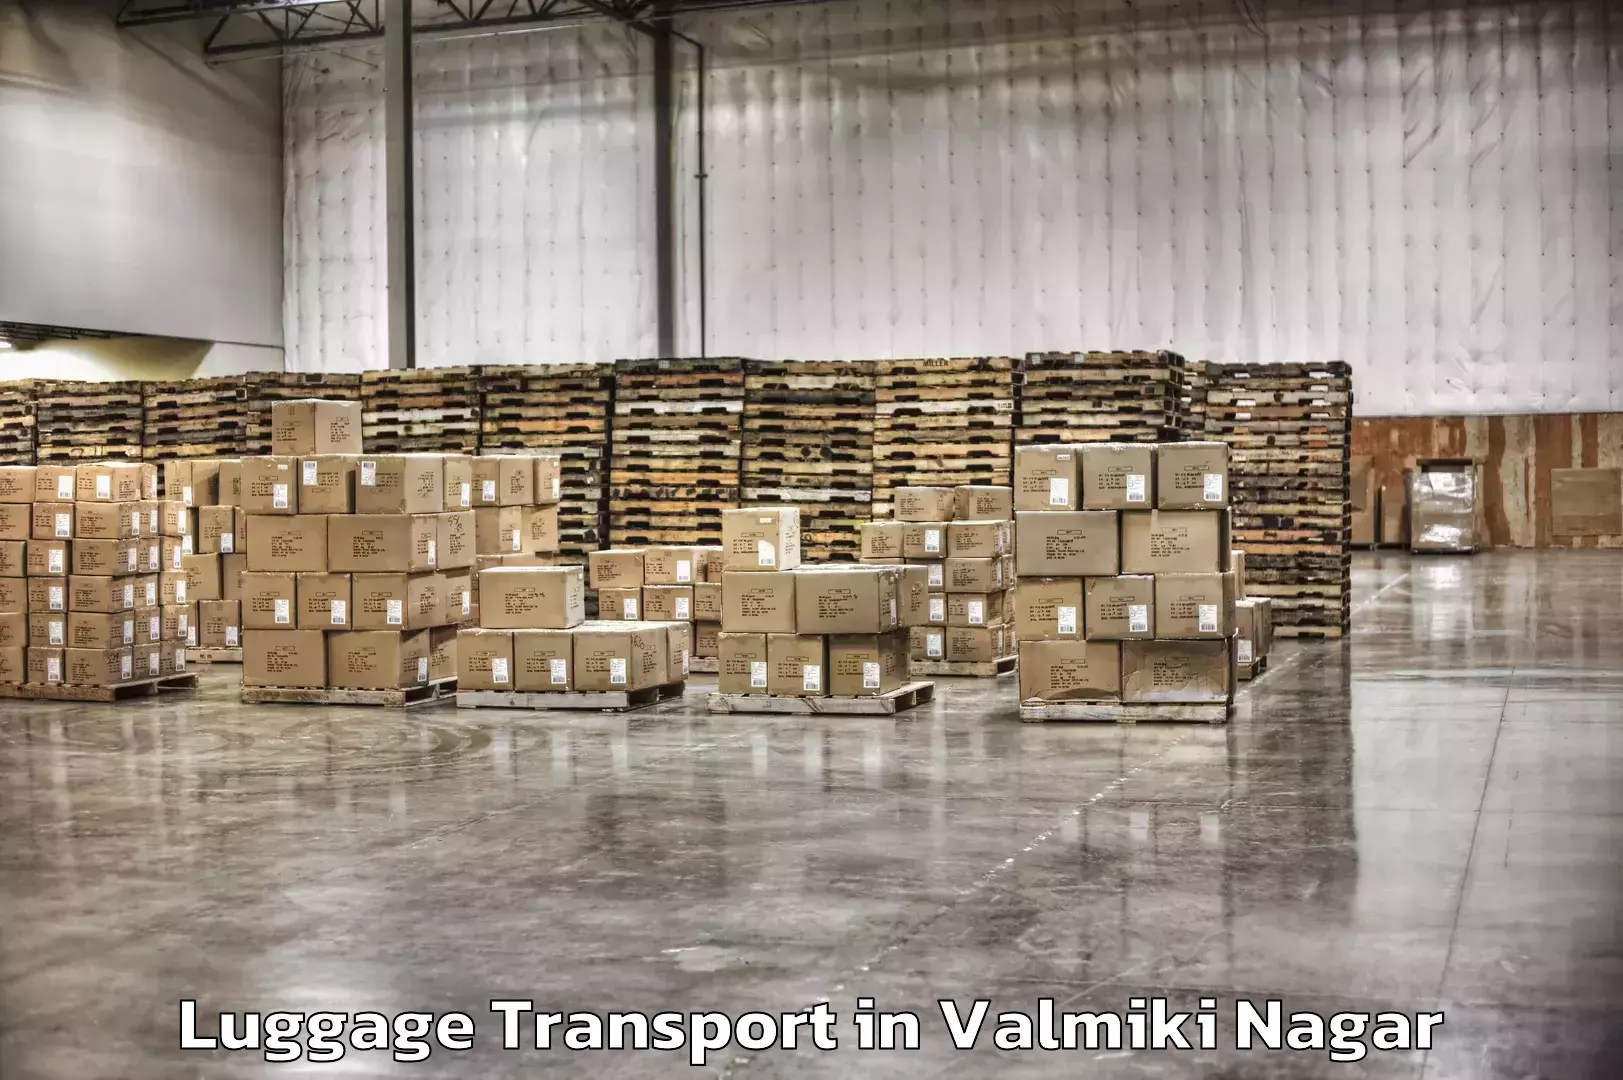 Long distance luggage transport in Valmiki Nagar